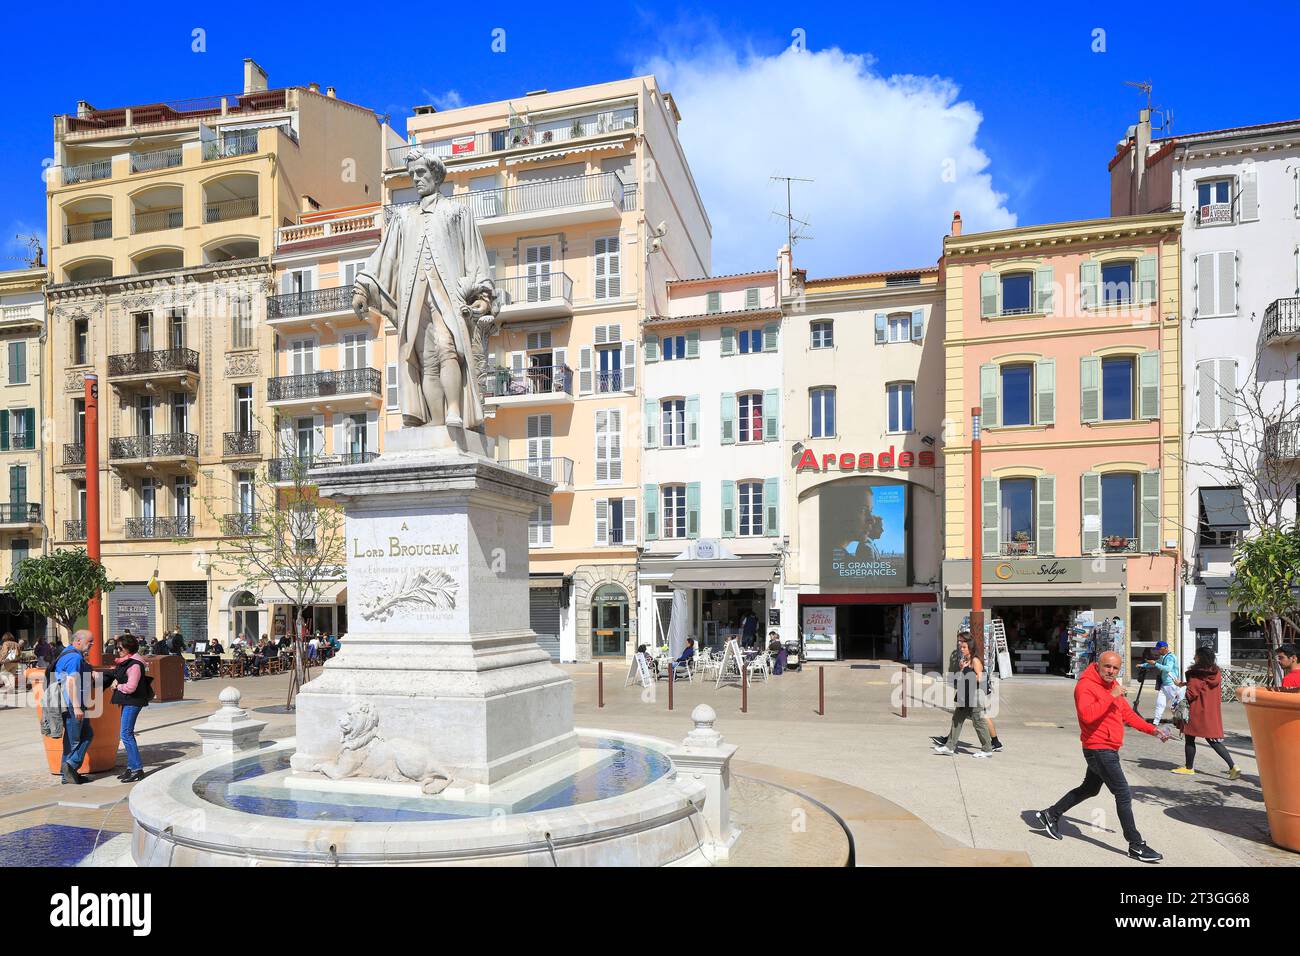 Francia, Alpes Maritimes, Cannes, Rue Felix Faure, statua del Lord scozzese Brougham Foto Stock